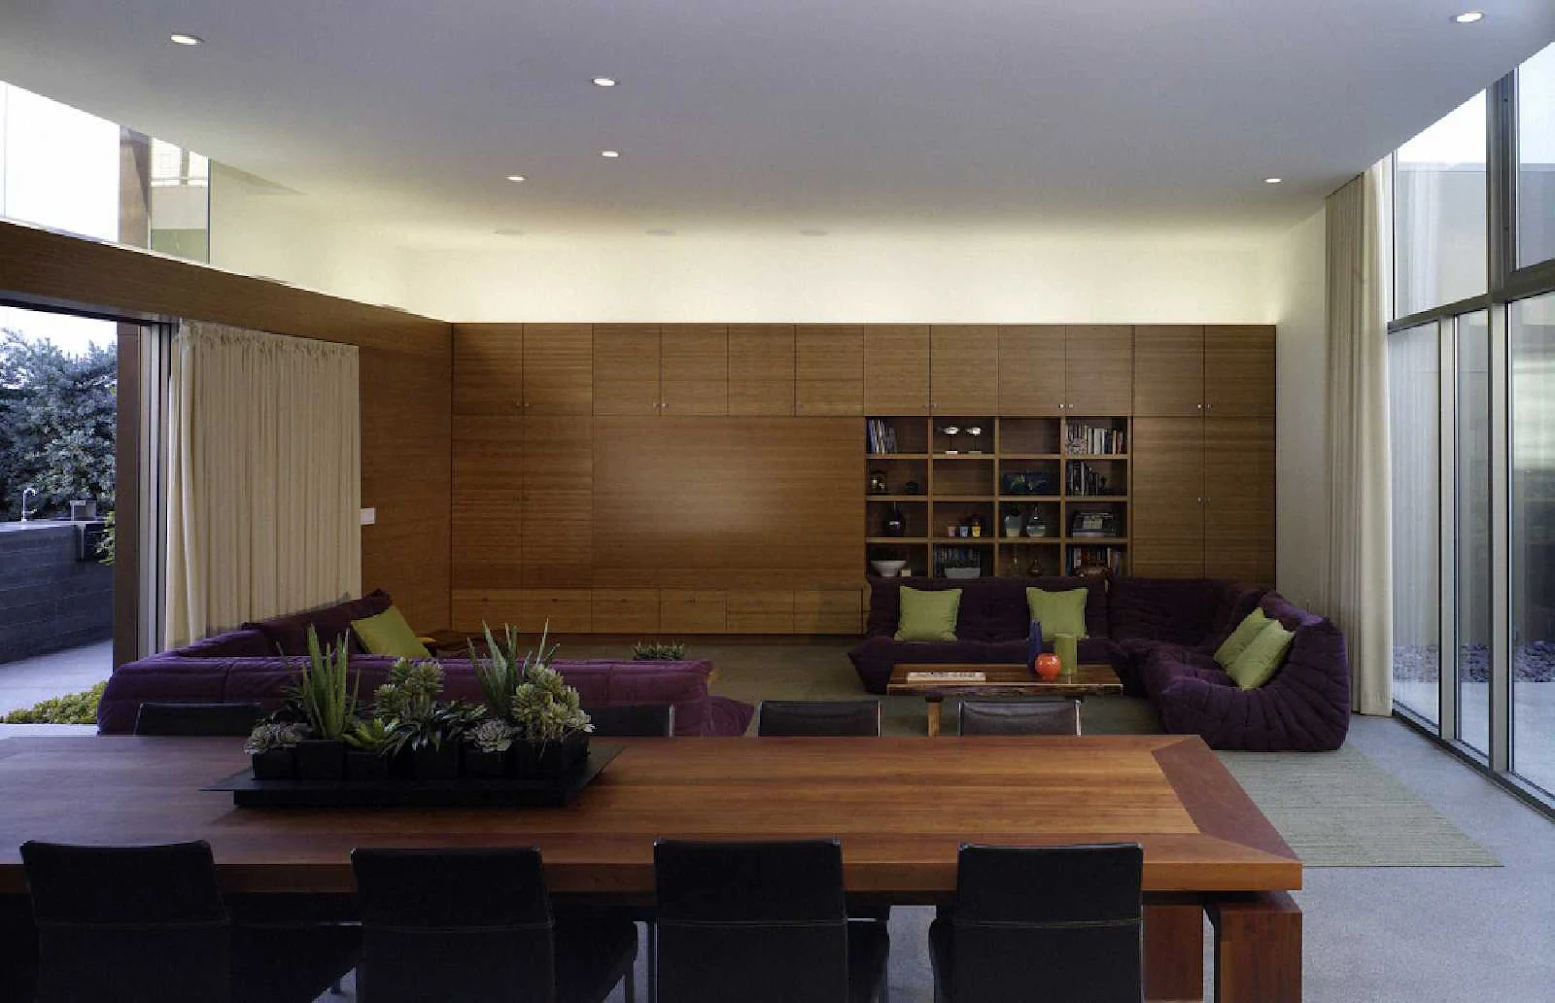 09 Yin-Yang House by Brooks + Scarpa Architects